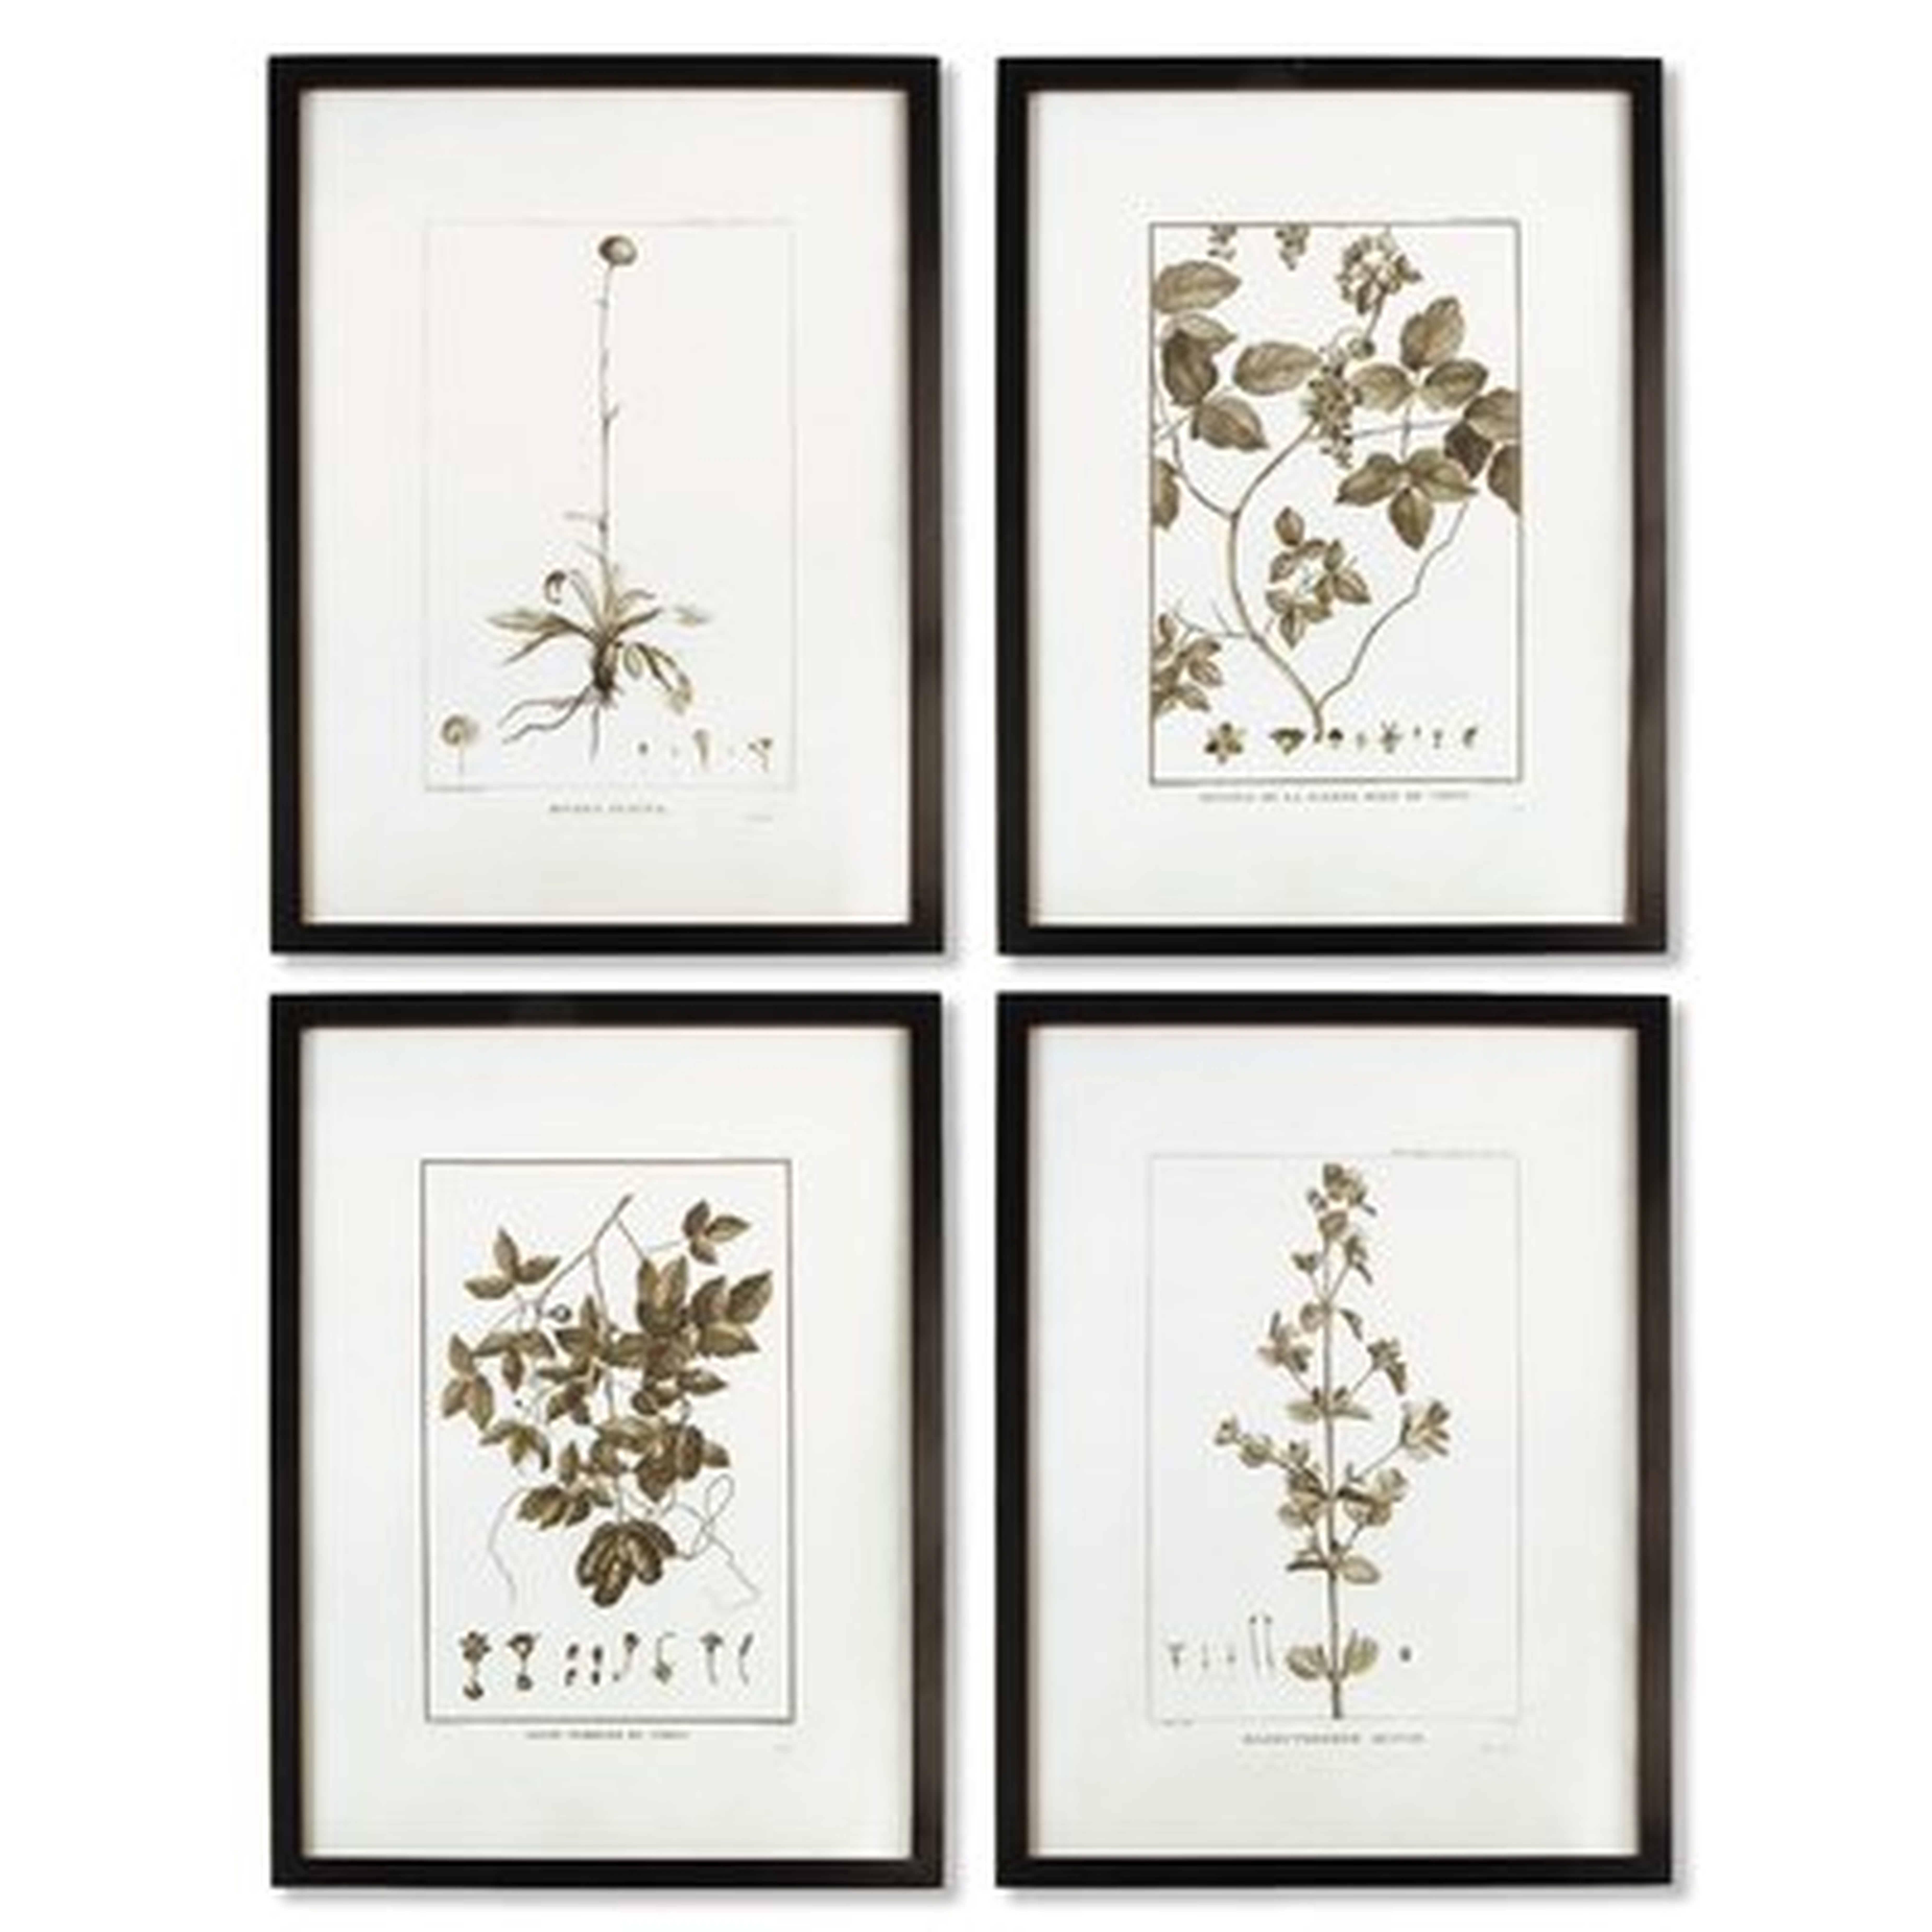 'Sepia Tone Botanical' 4 Piece Picture Frame Graphic Art Set - Birch Lane